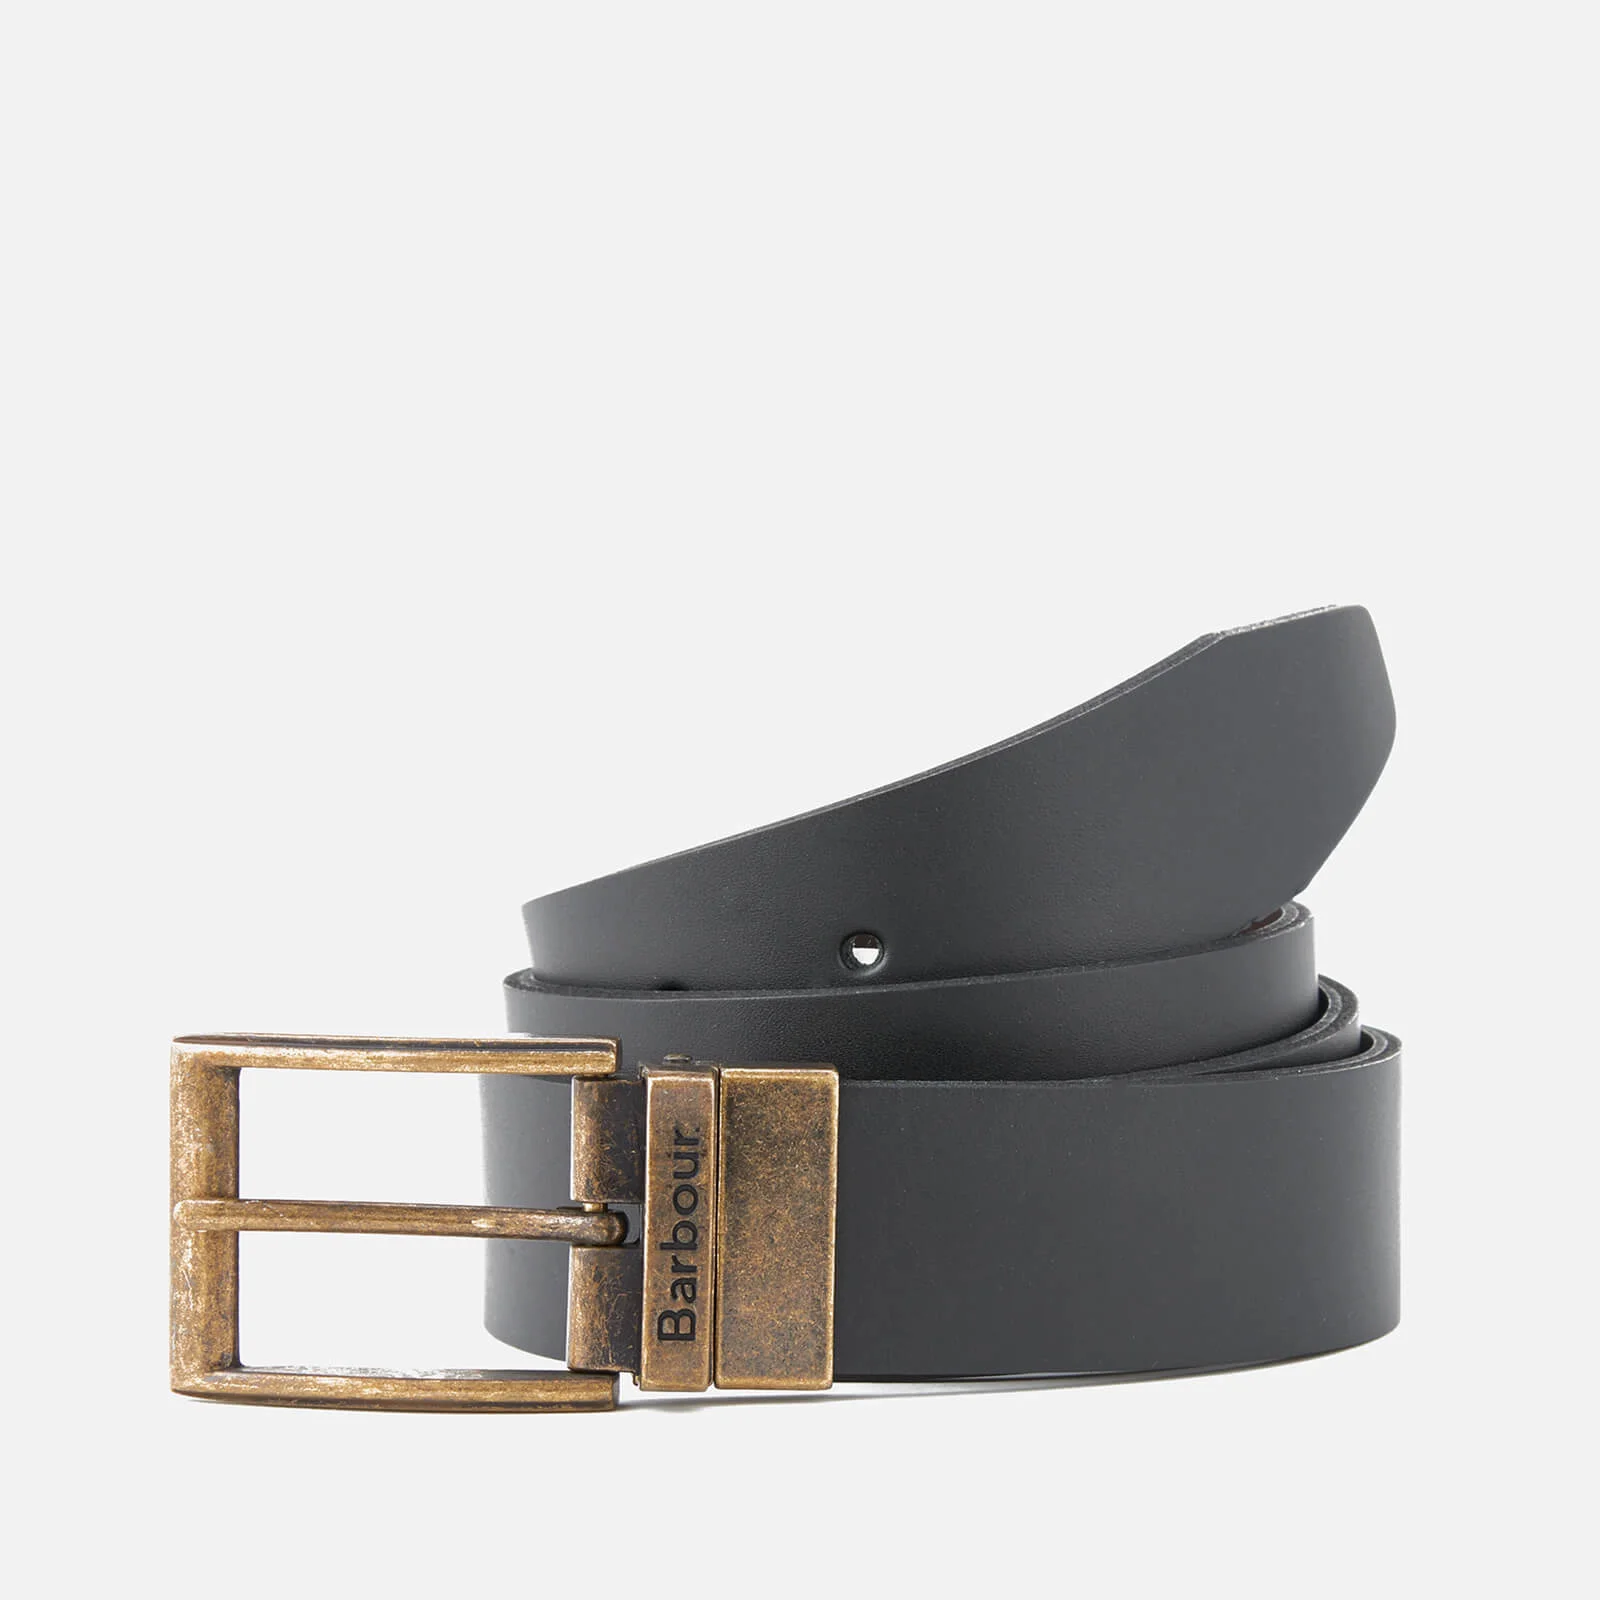 Barbour Men's Reversible Leather Belt Gift Box - Black Image 1